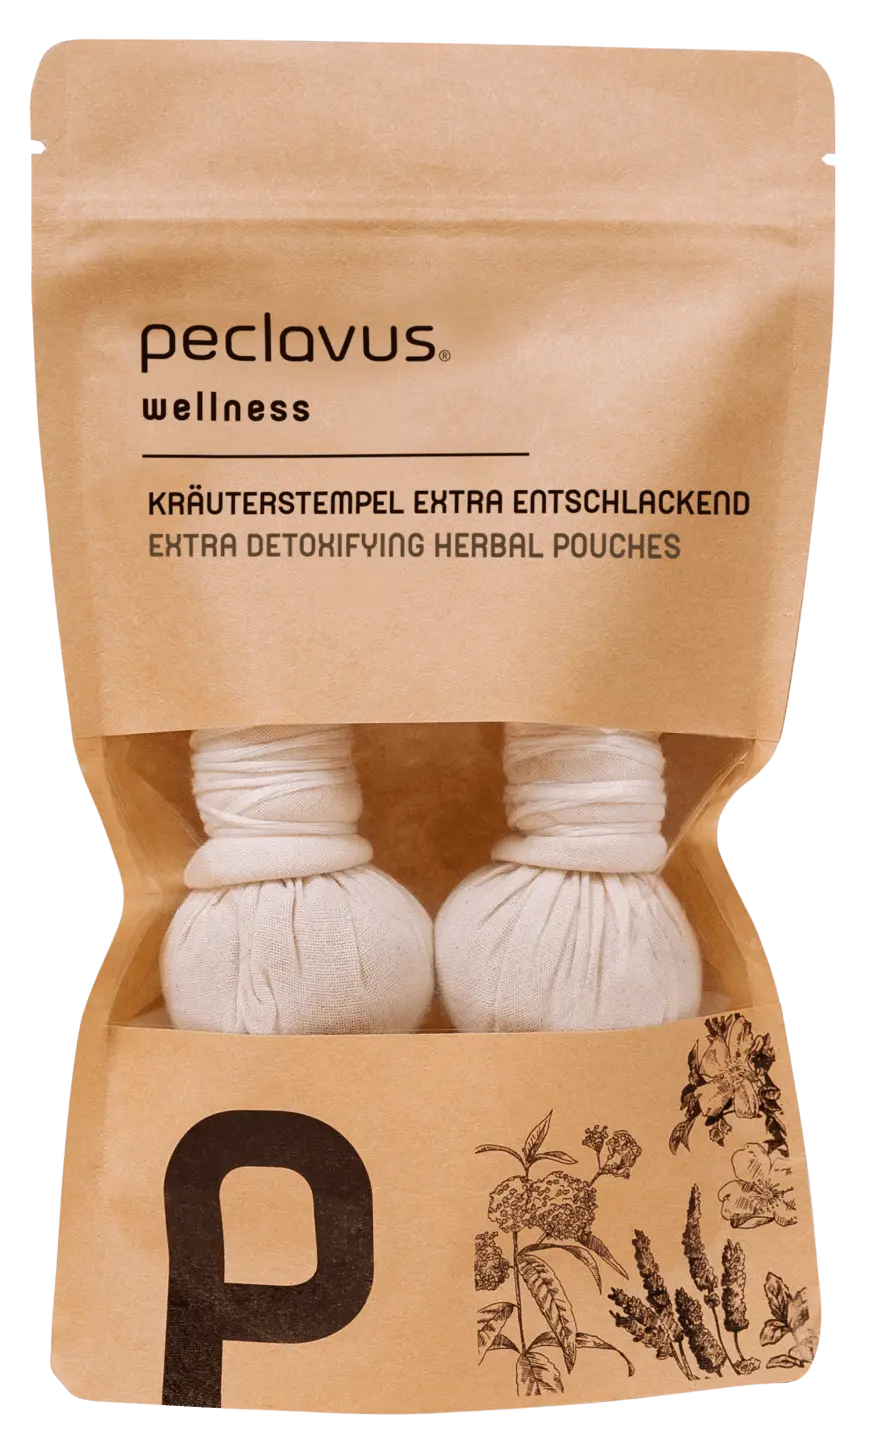 Peclavus wellness Kräuterstempel extra entschlackend